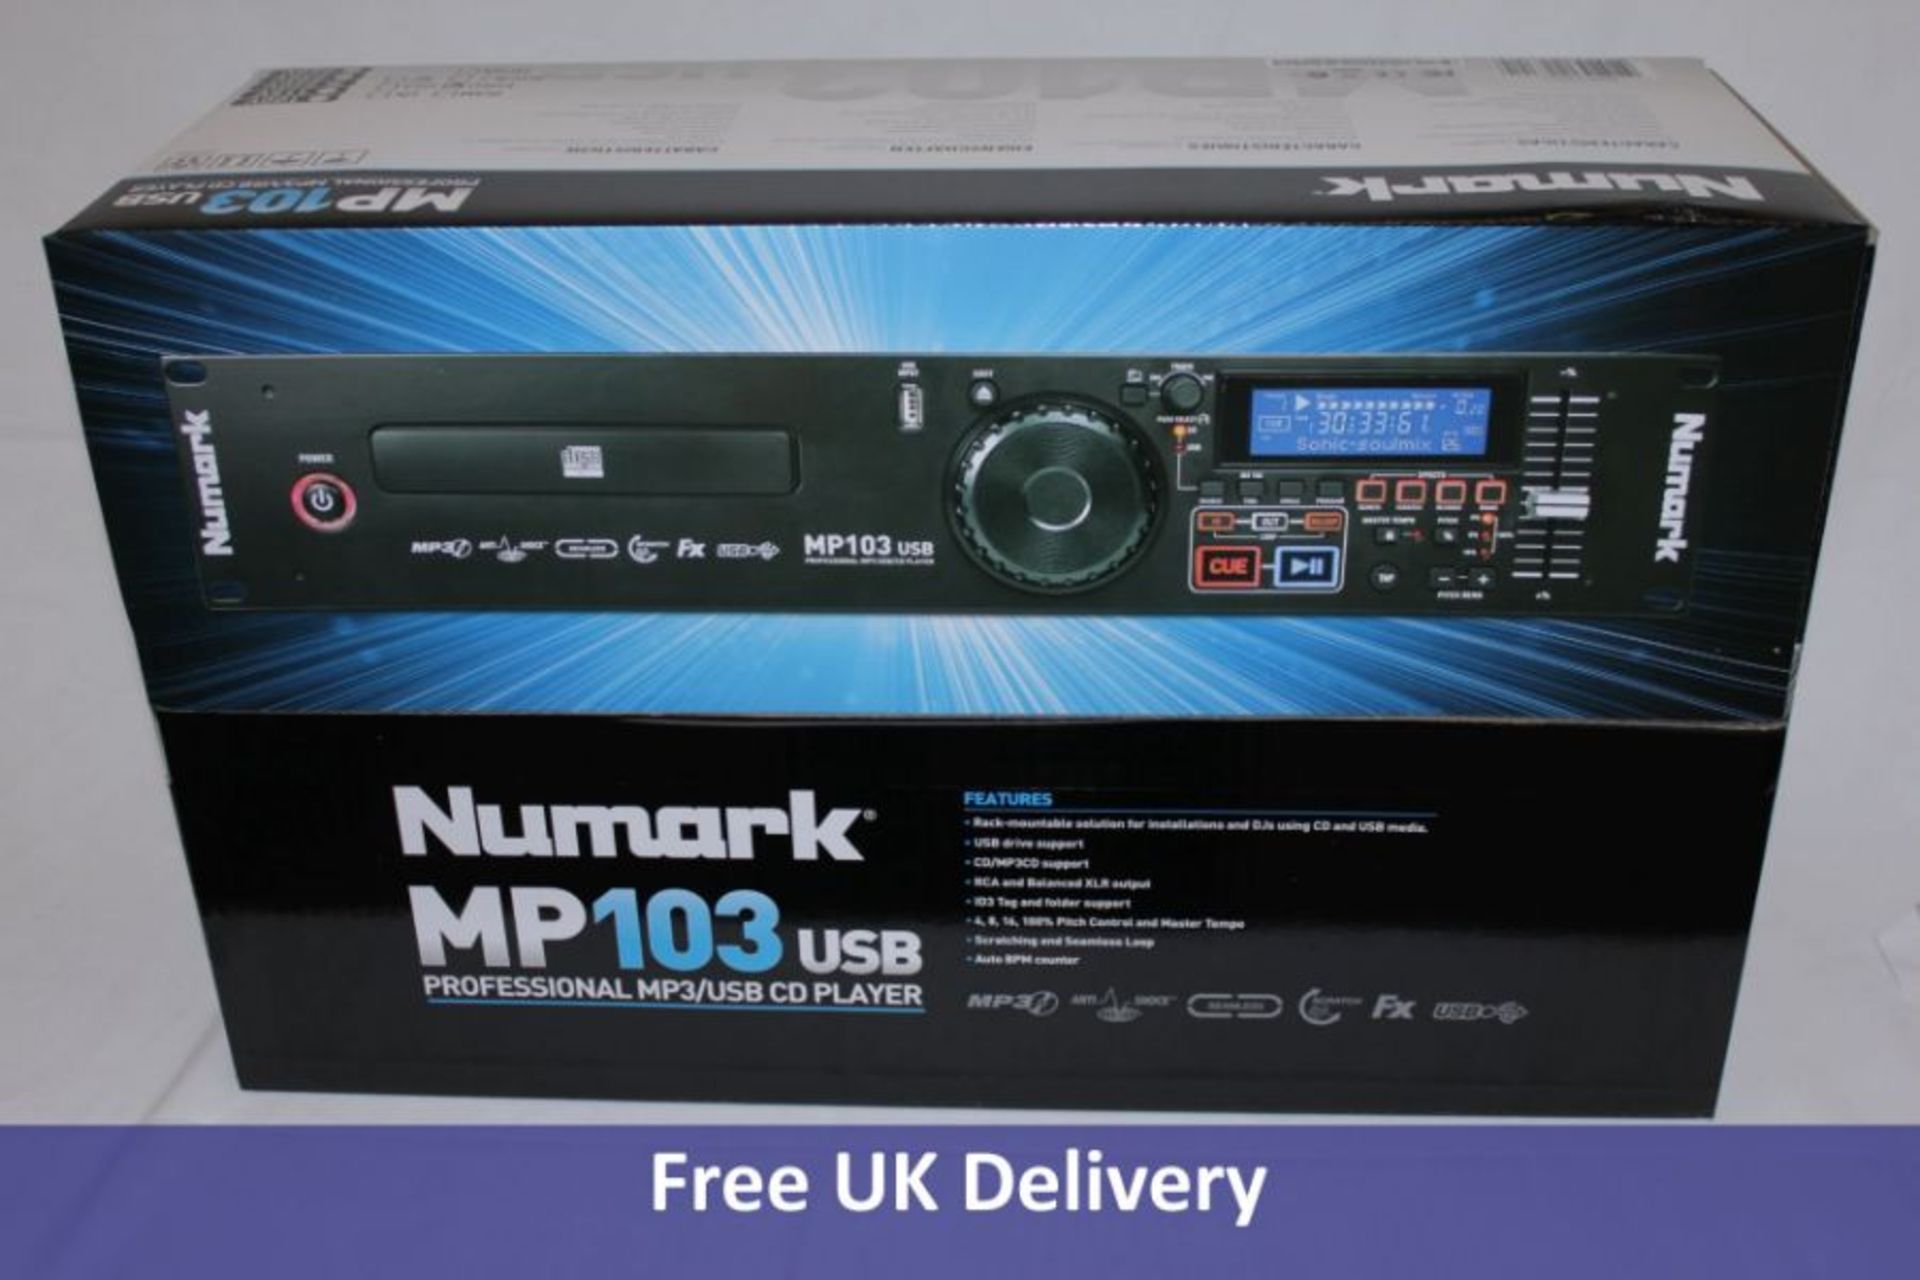 Numark MP103USB Professional USB and MP3 CD Player